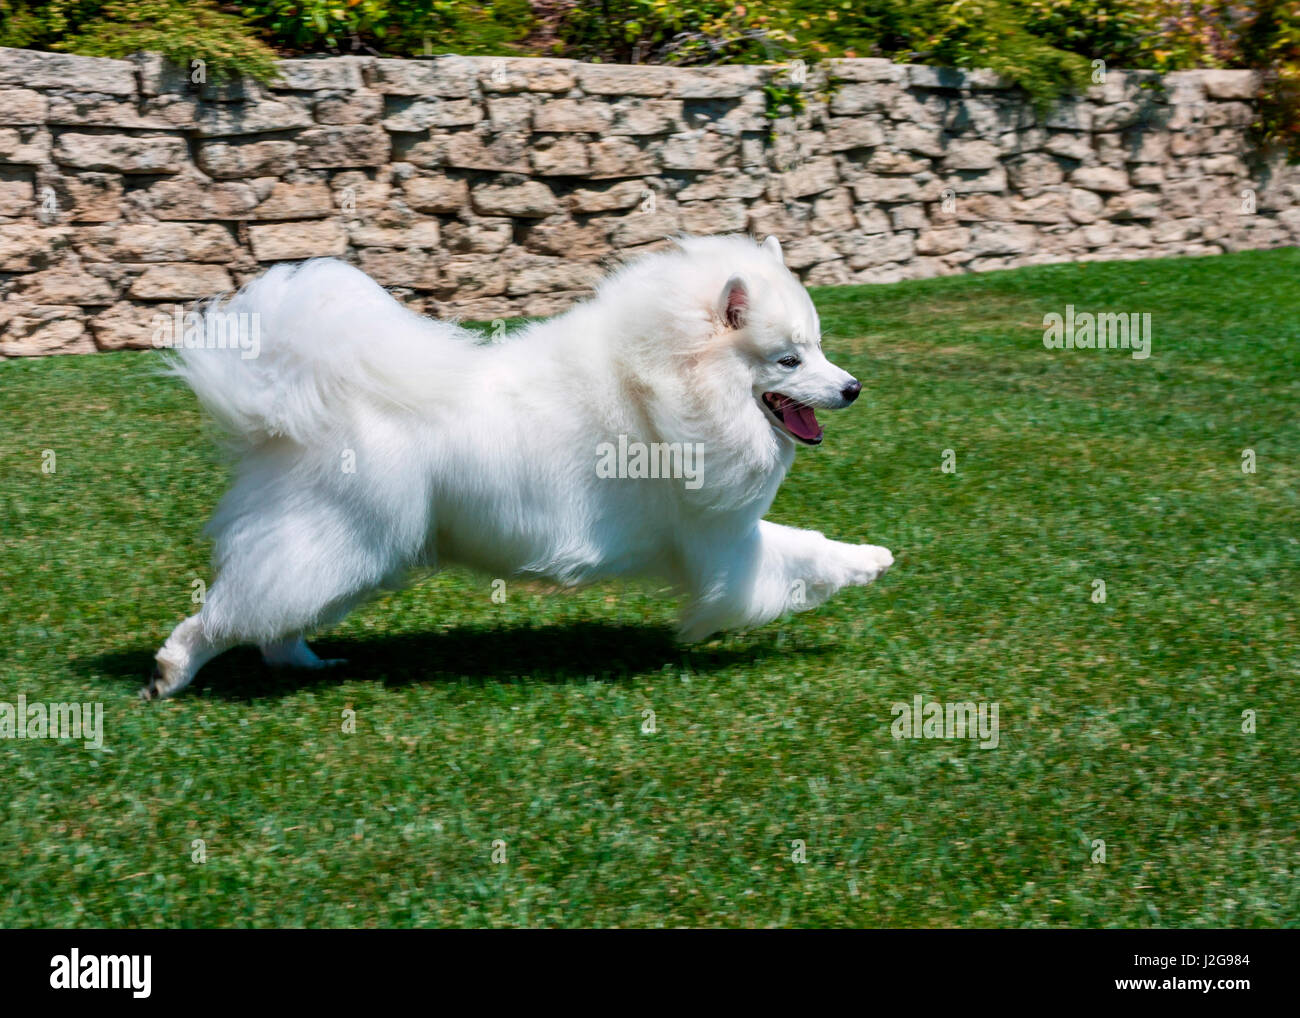 American Eskimo dog running in a garden (MR & PR) Stock Photo